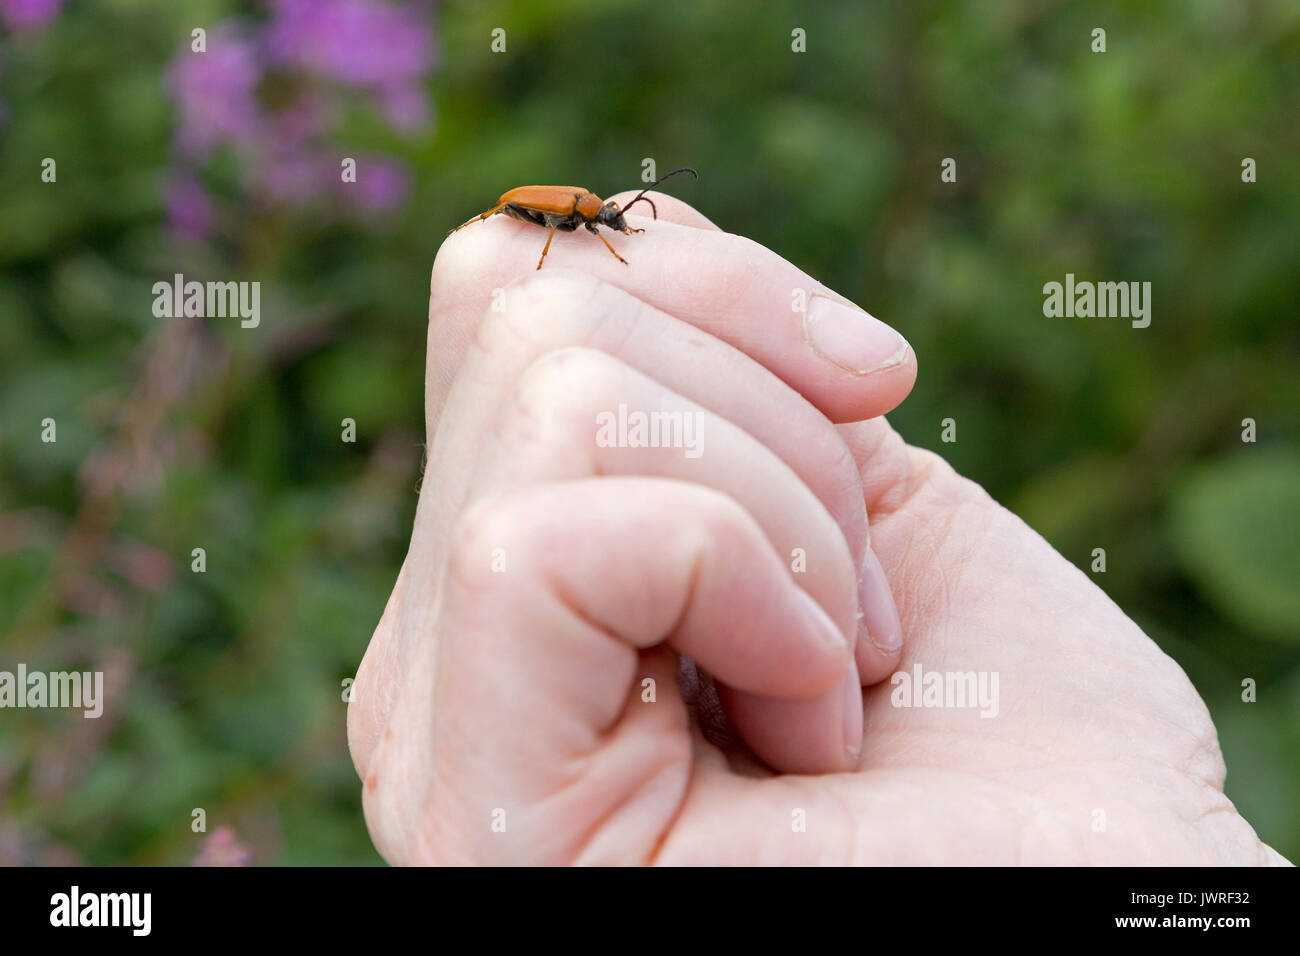 Red longhorn beetle (Stictoleptura rubra) su una donna di lato Foto Stock